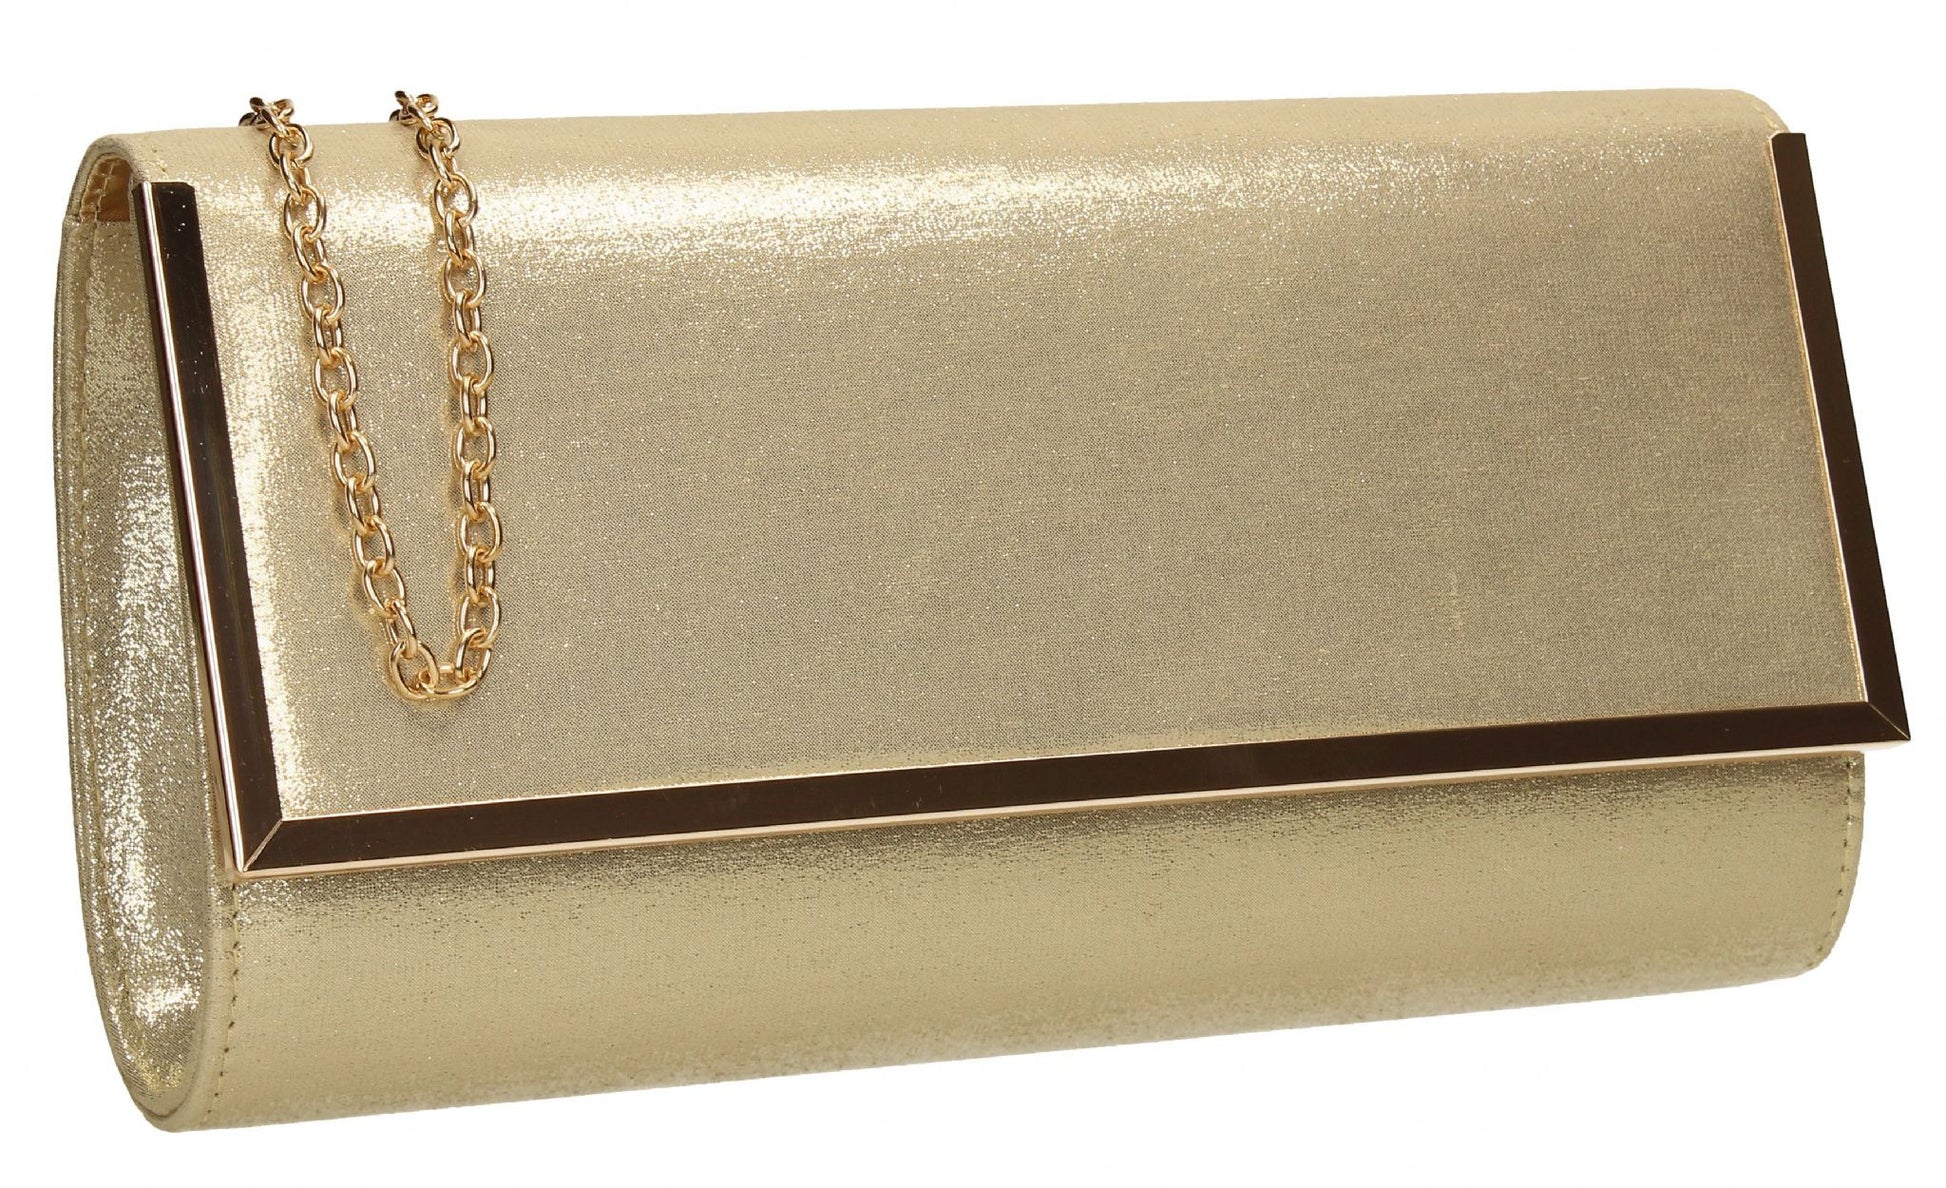 SWANKYSWANS Ruby Clutch Bag Gold Cute Cheap Clutch Bag For Weddings School and Work